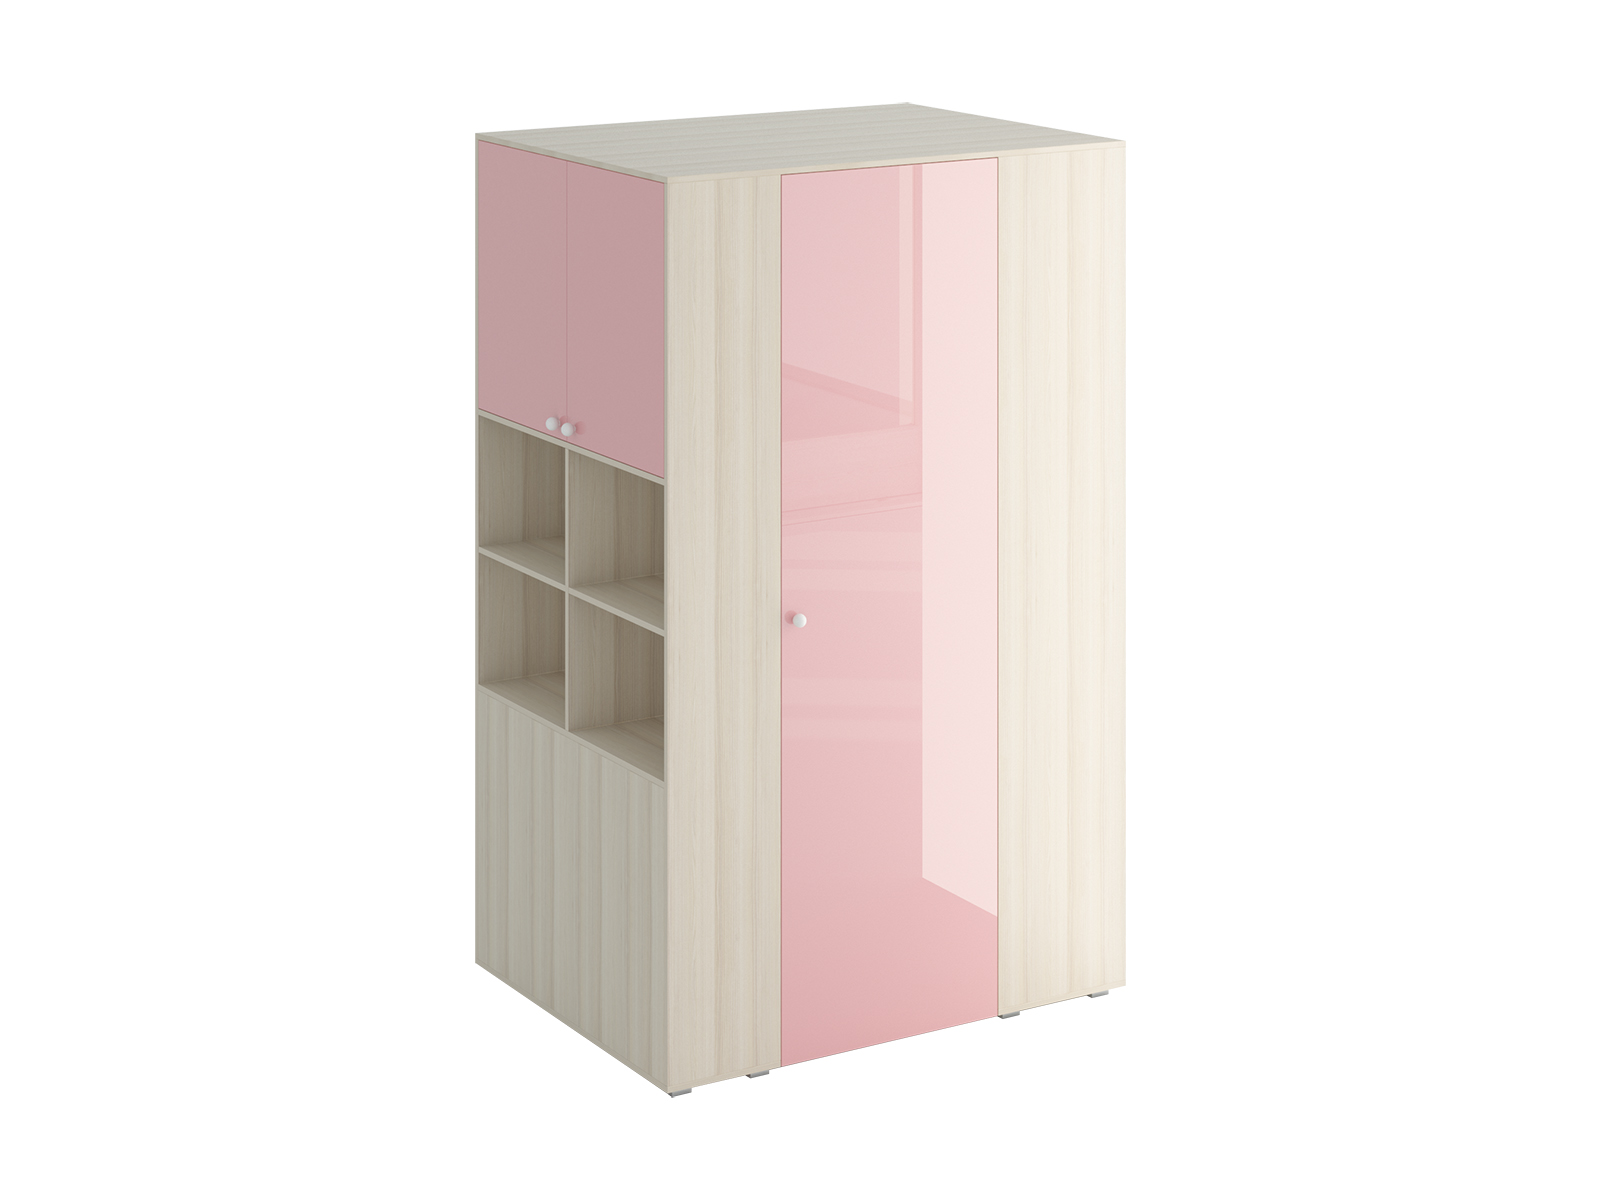  Шкаф-гардероб play (ogogo) розовый 140x224x102 см.